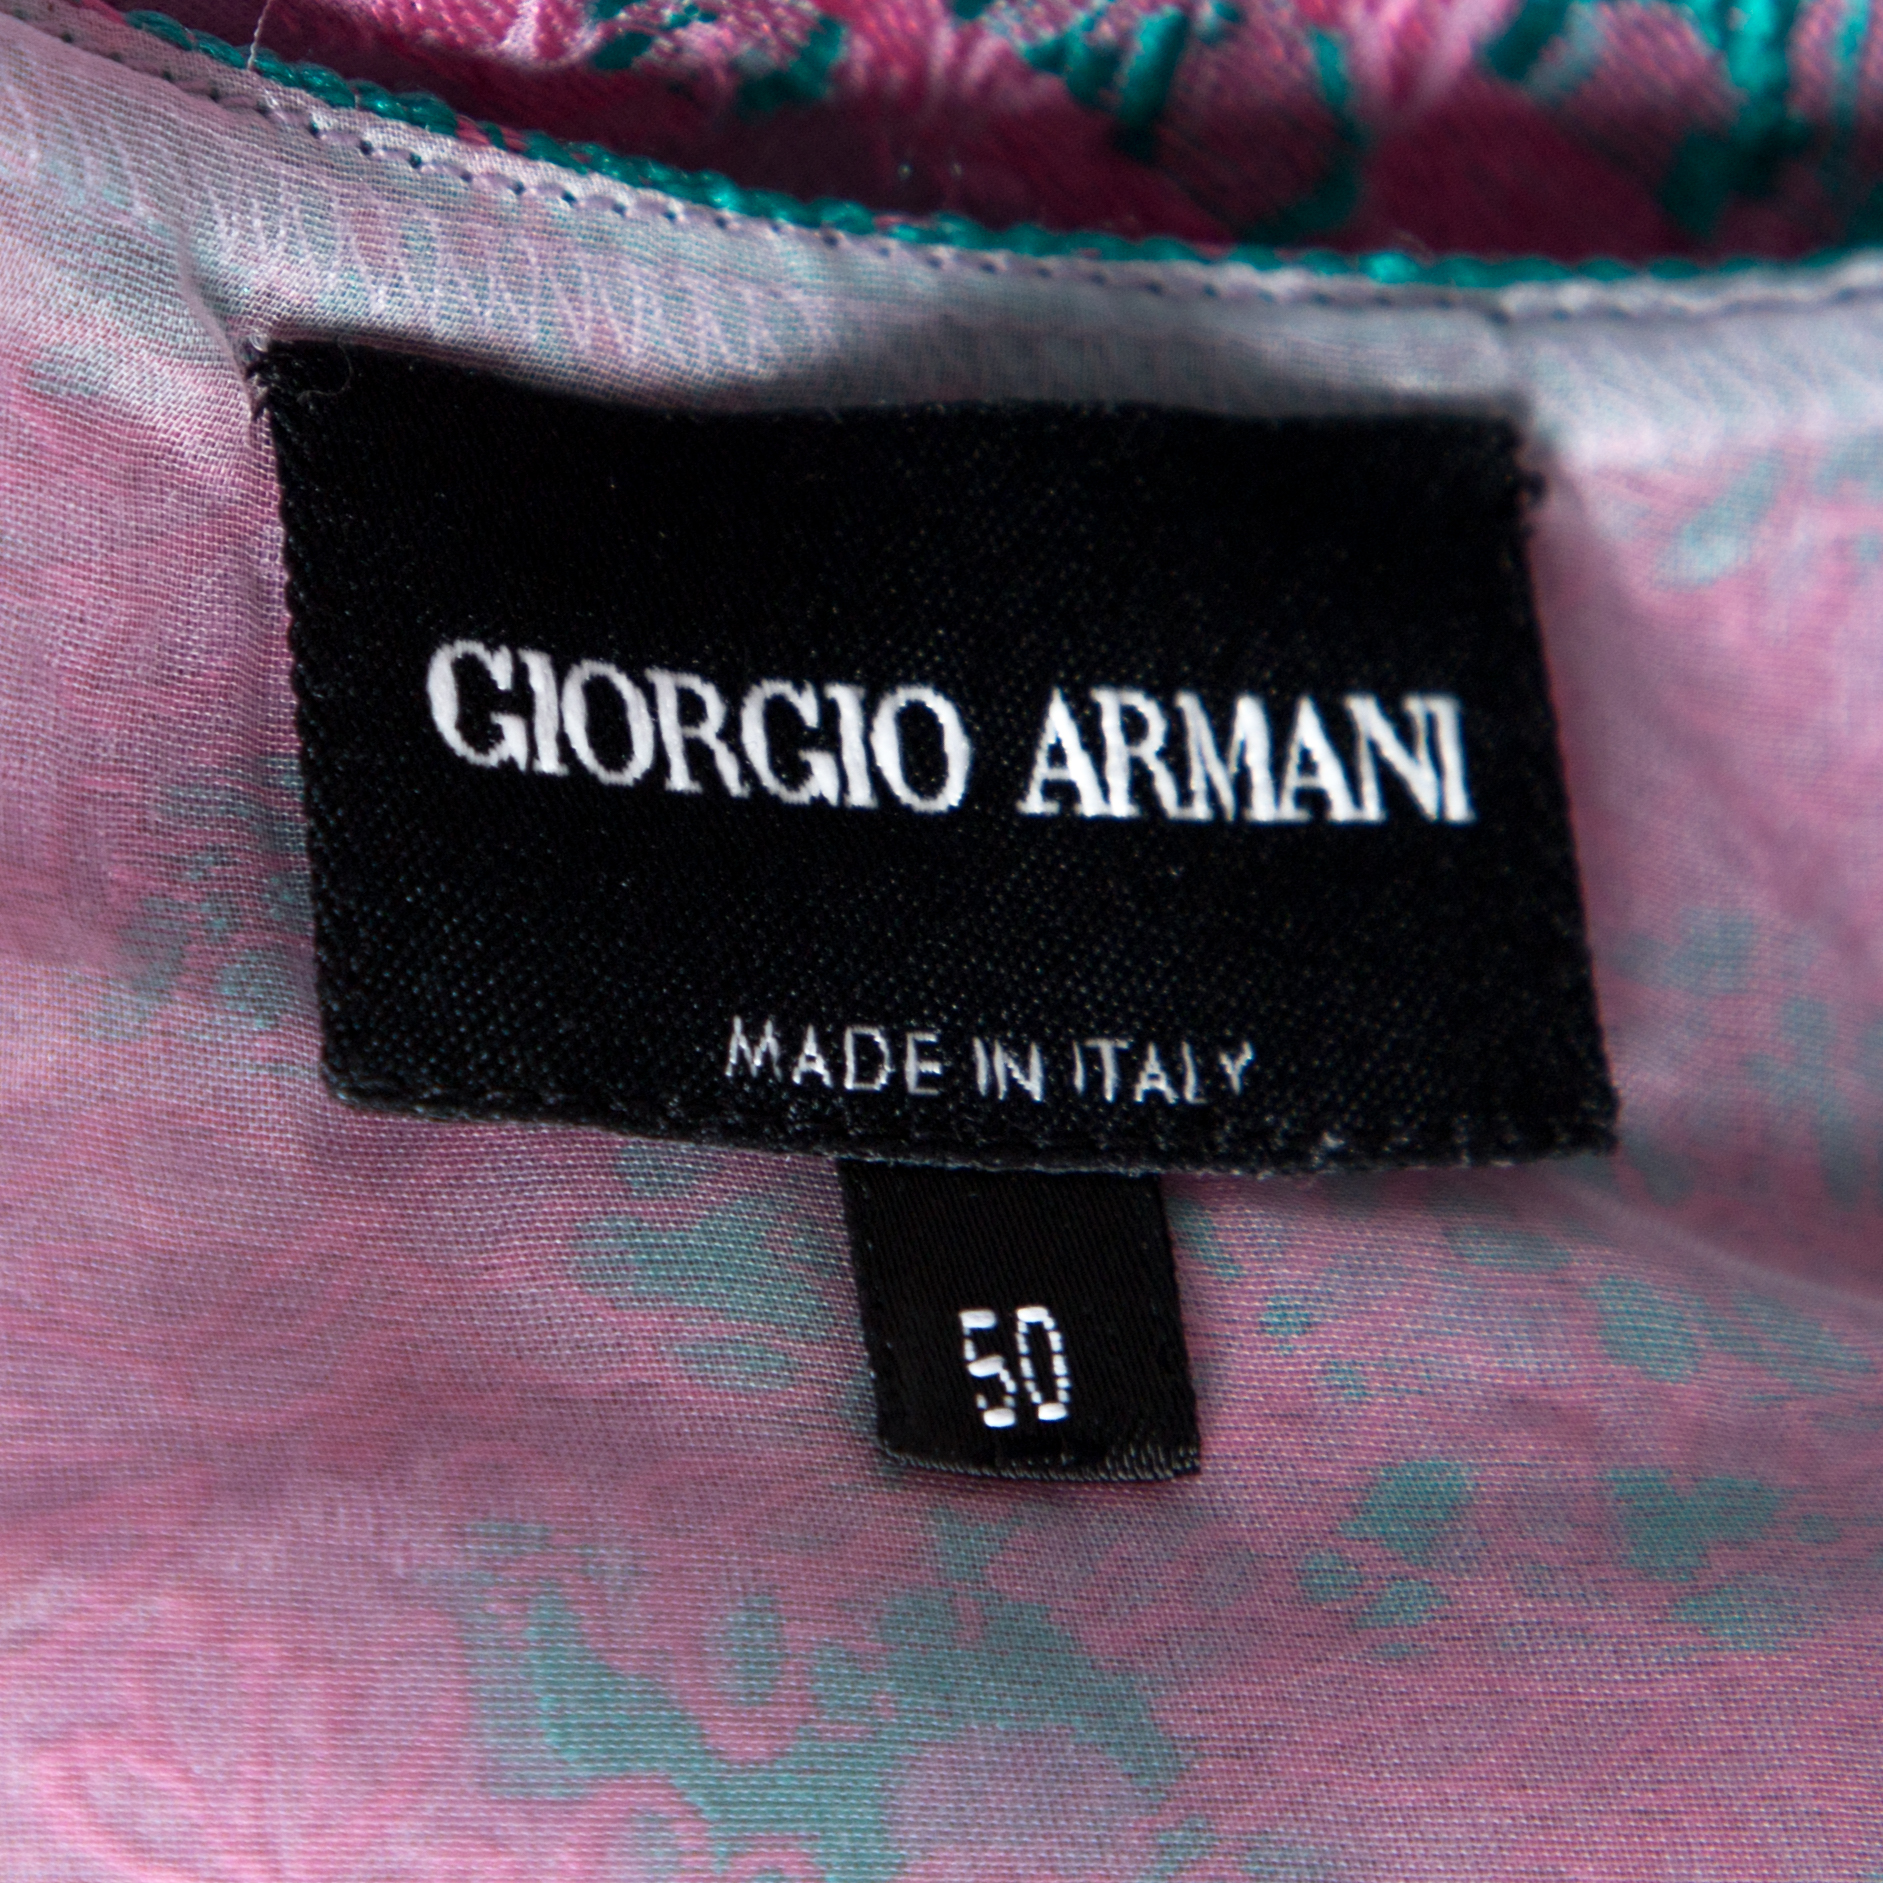 Giorgio Armani Pink Floral Jacquard Silk Blend Oversized Blouse XL